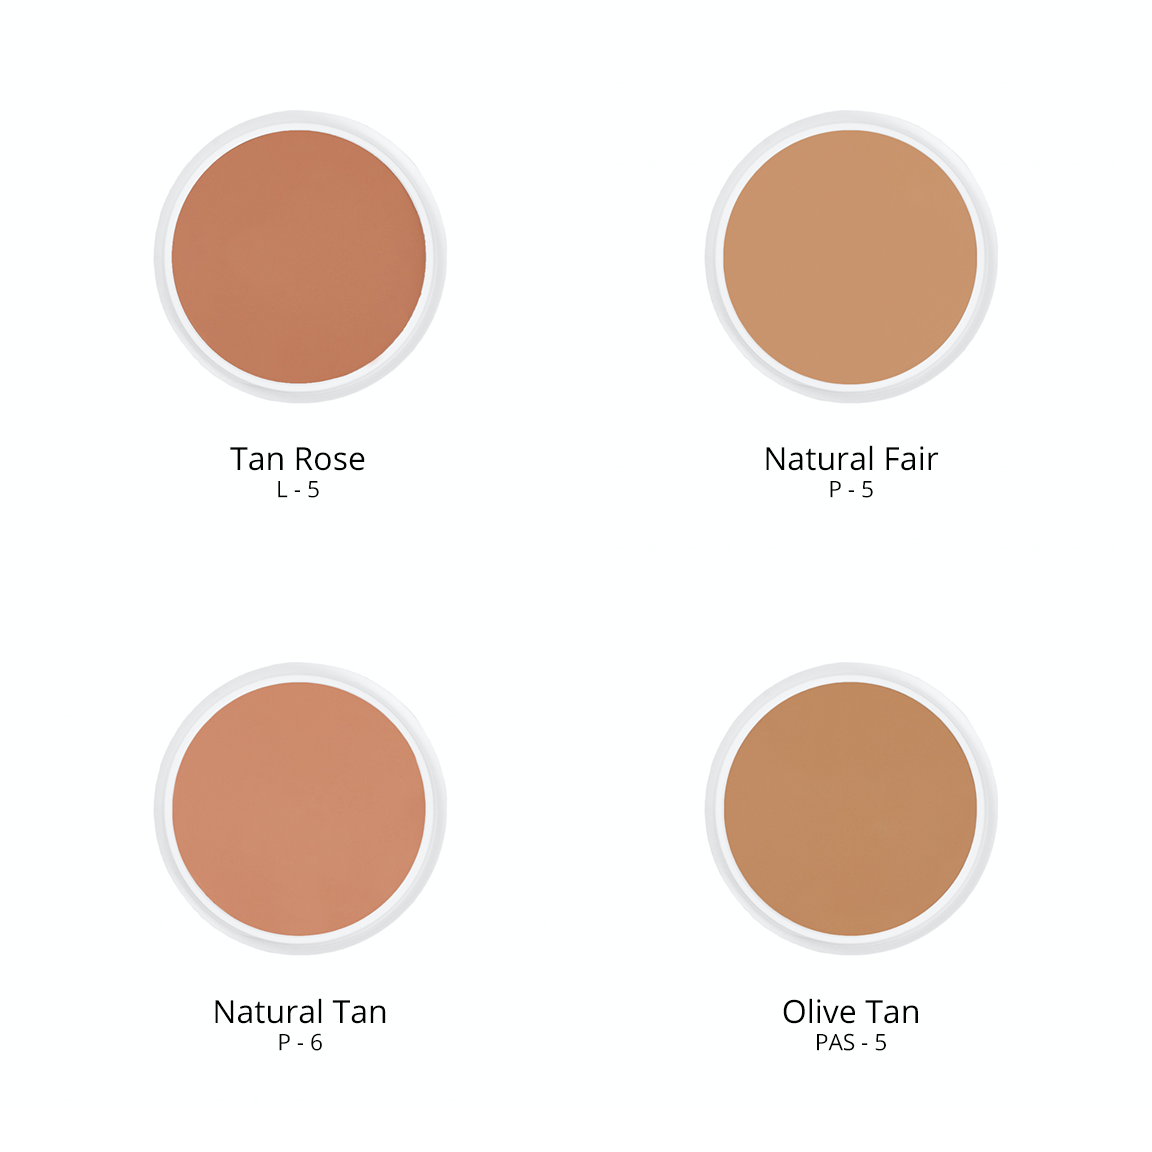 Ben Nye creme foundation in 4 shades: Tan Rose L - 5, Natural Fair P - 5, Natural Tan P - 6, and Olive Tan PAS - 5.